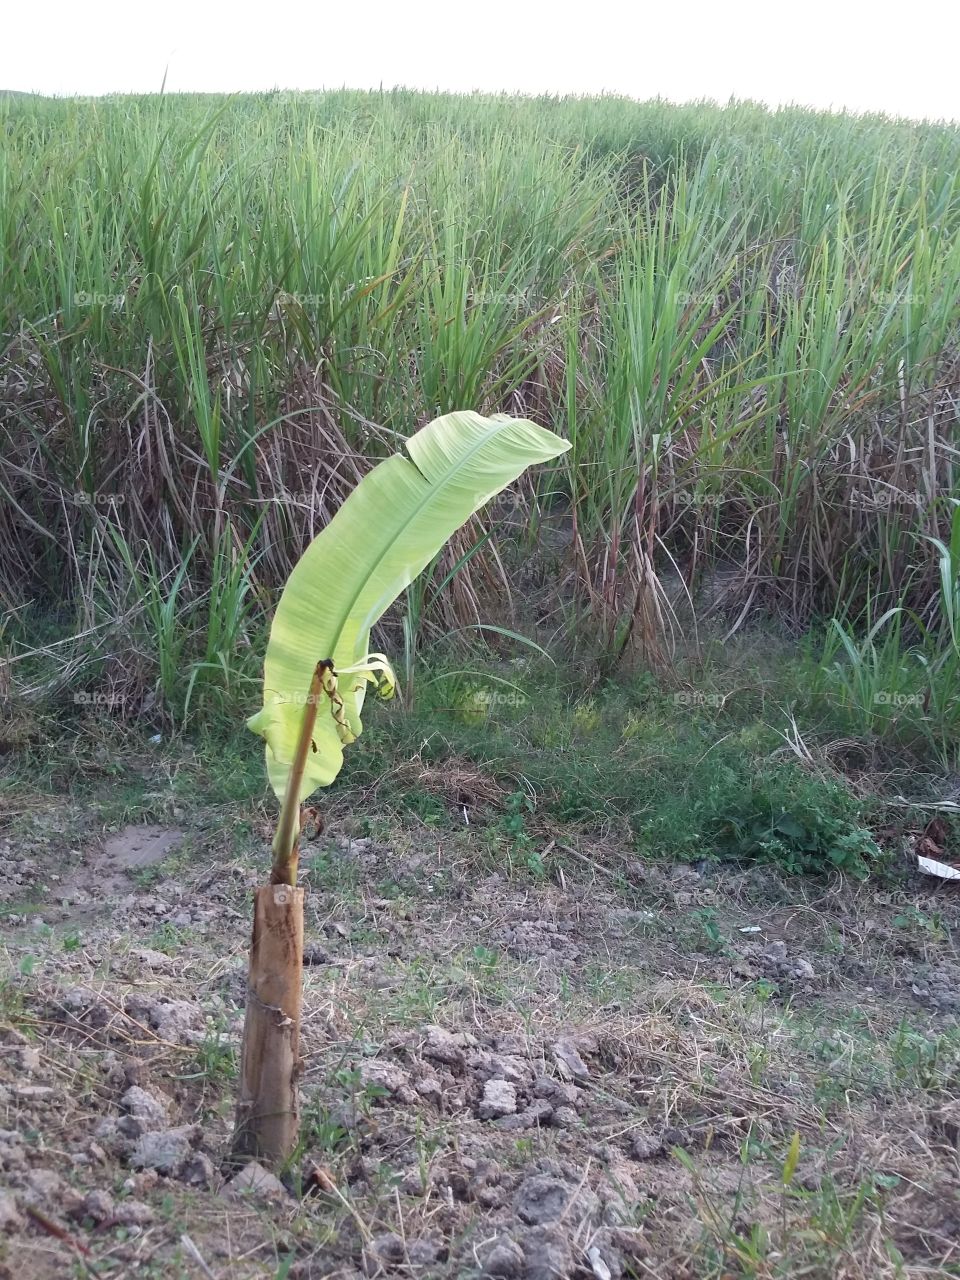 Banana tree seedling near the Ipojuca sugarcane plantation in Ipojuca, Pernambuco, Brazil.